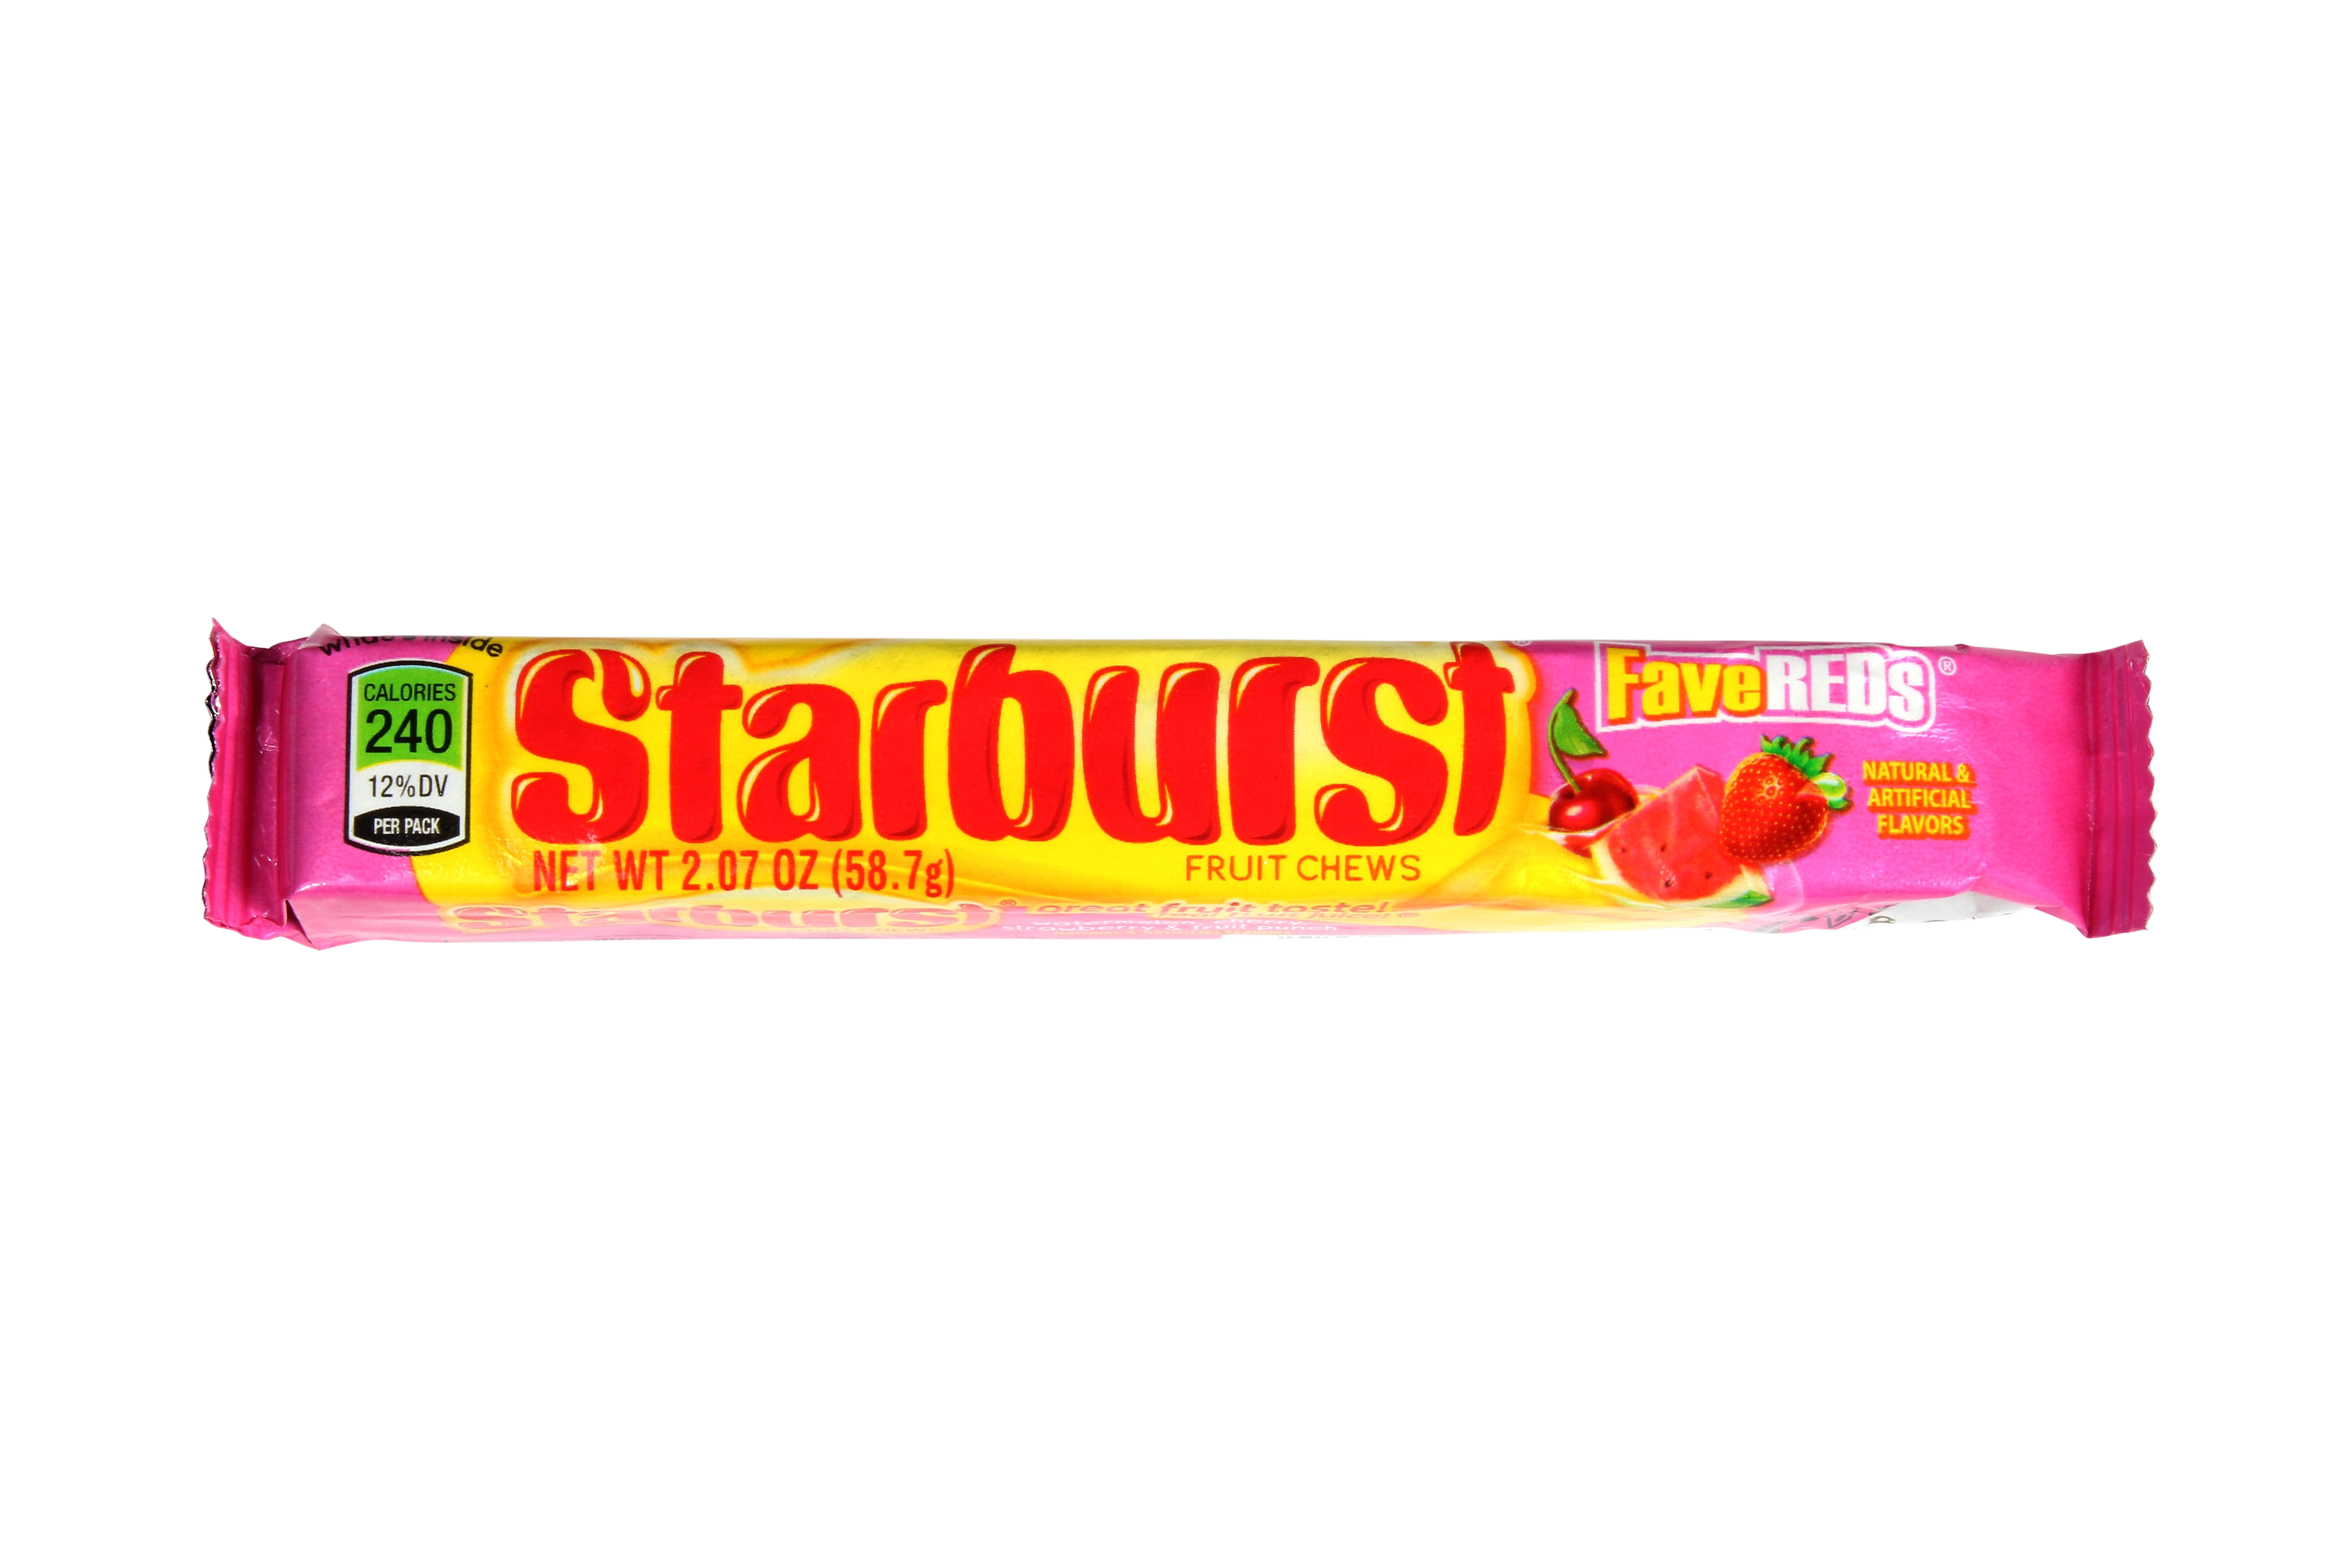 Starburst FaveReds Fruit Chews 2.07oz | Hangry Kits